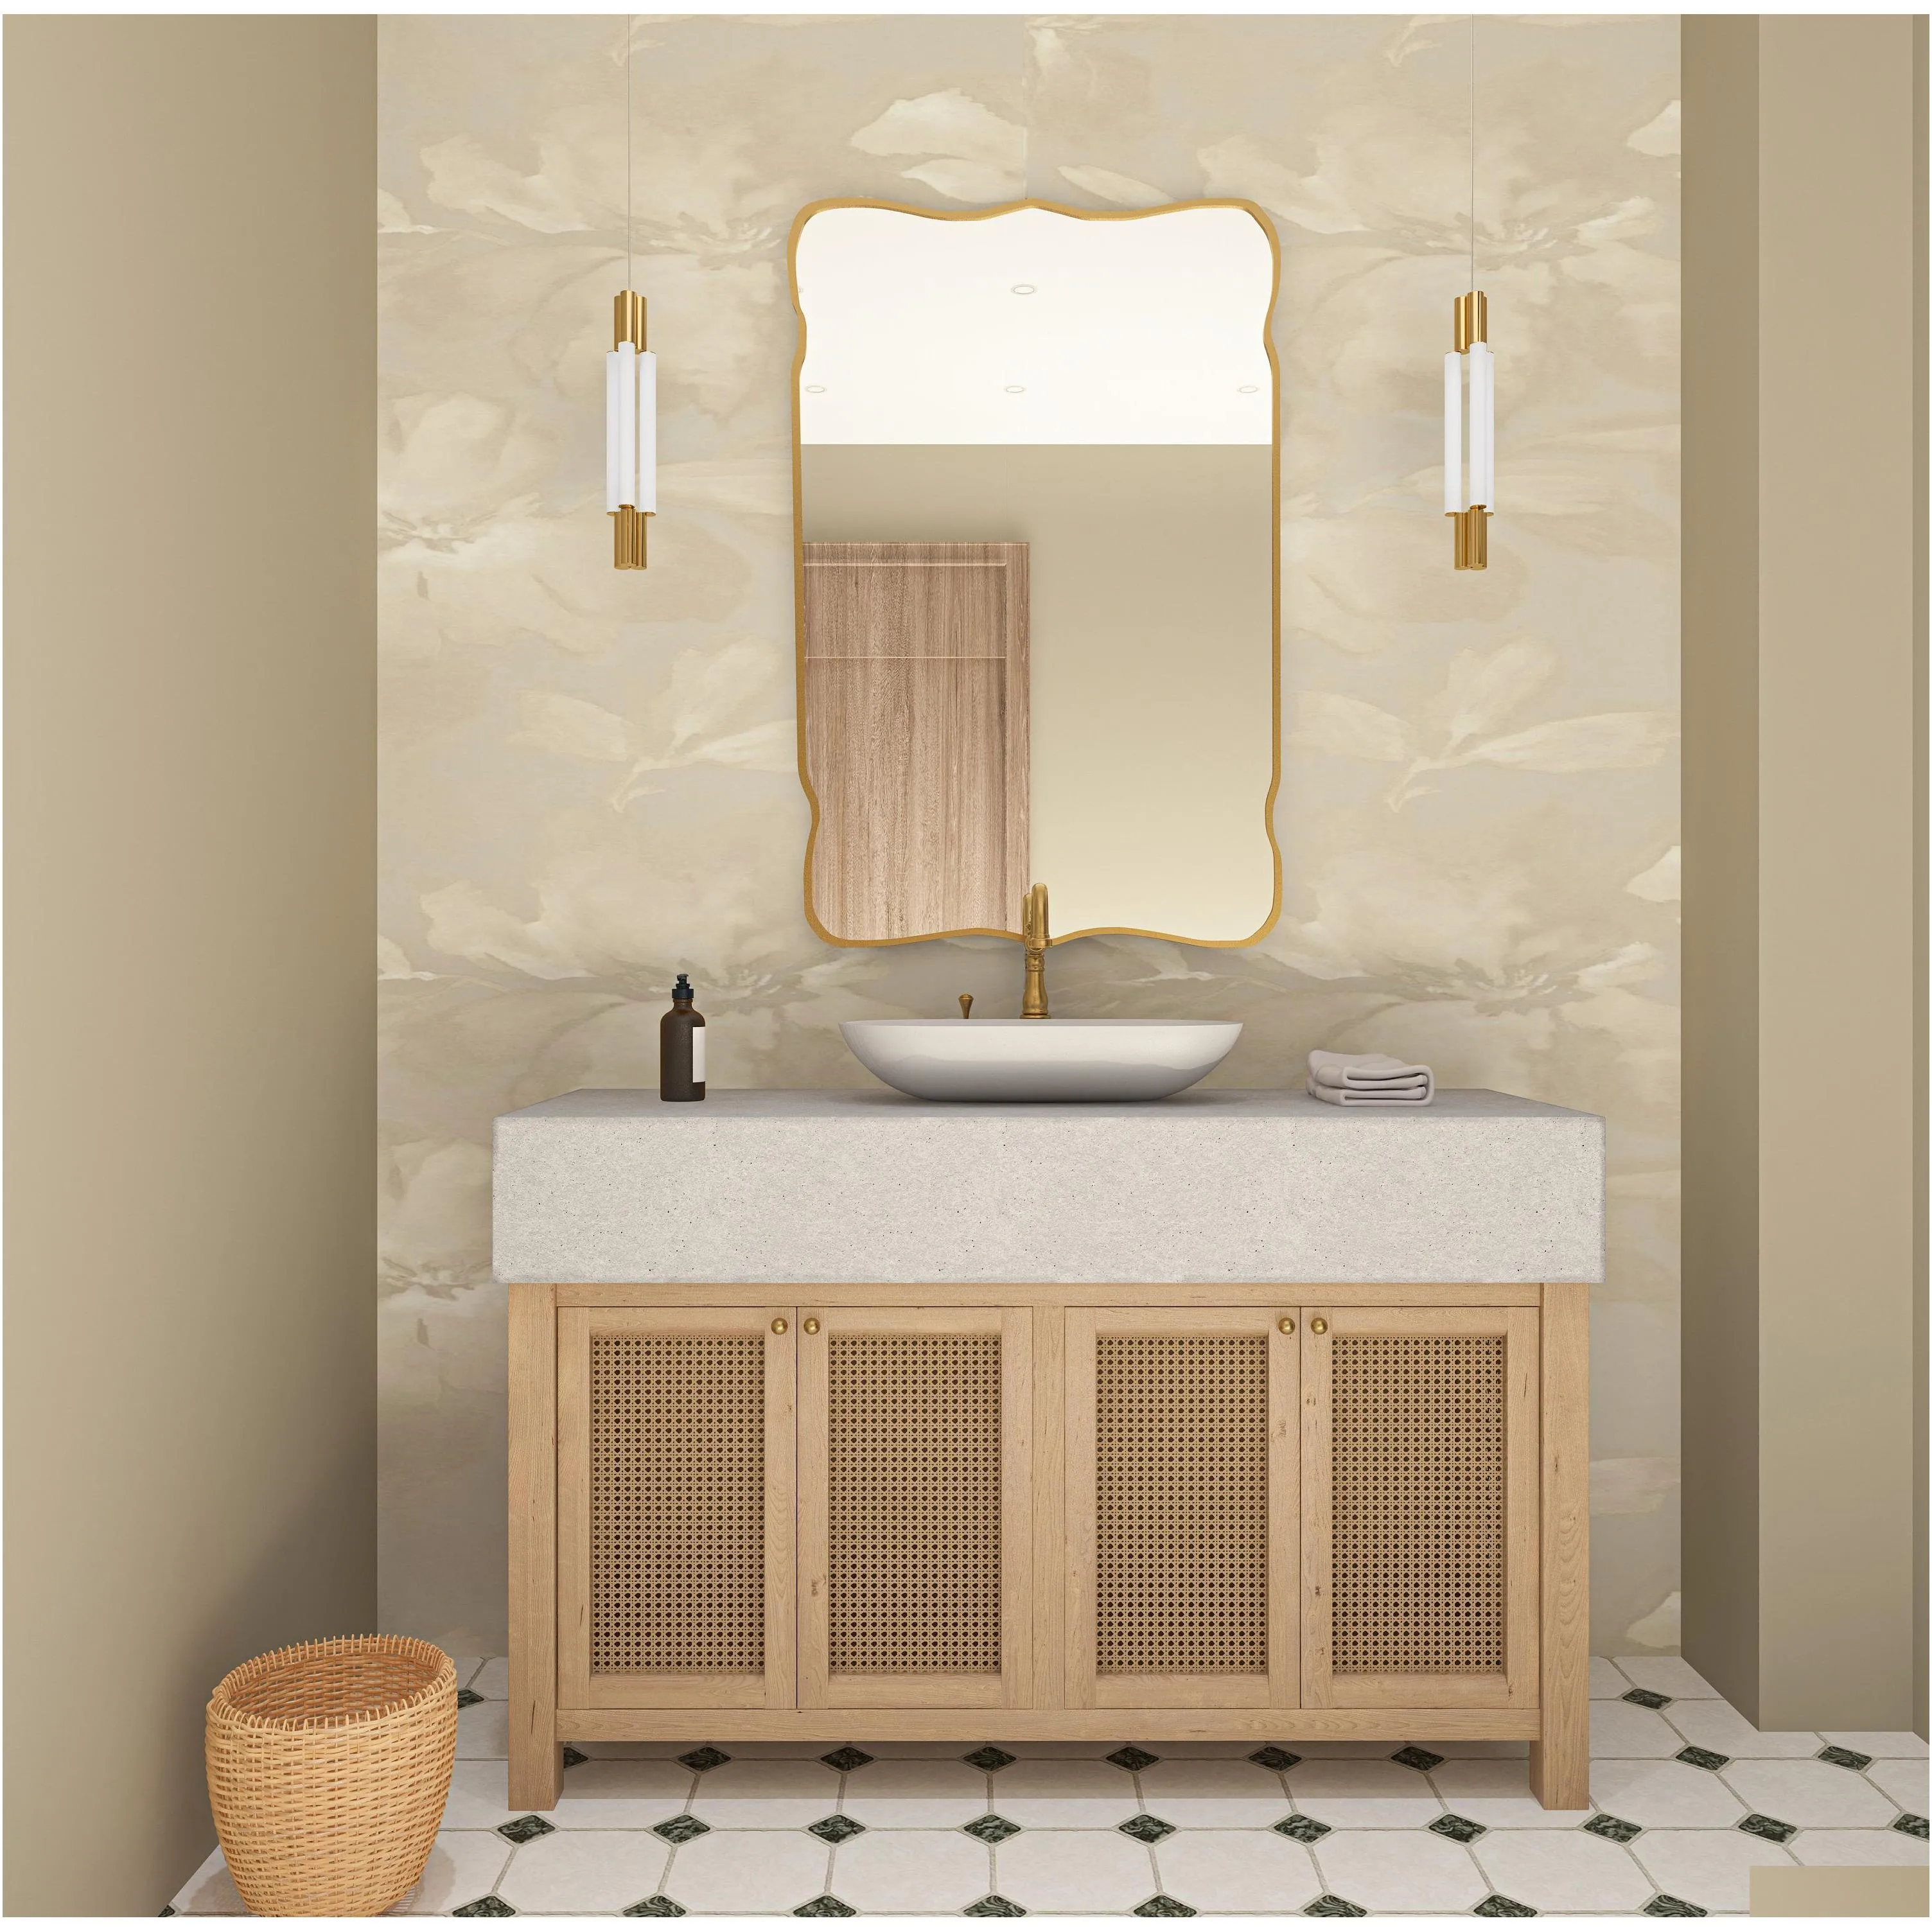 Mirrors Mirror Home Decor Aesthetic Wall Design Irregar Style Bathroom Drop Delivery Home Garden Home Decor Otkdw